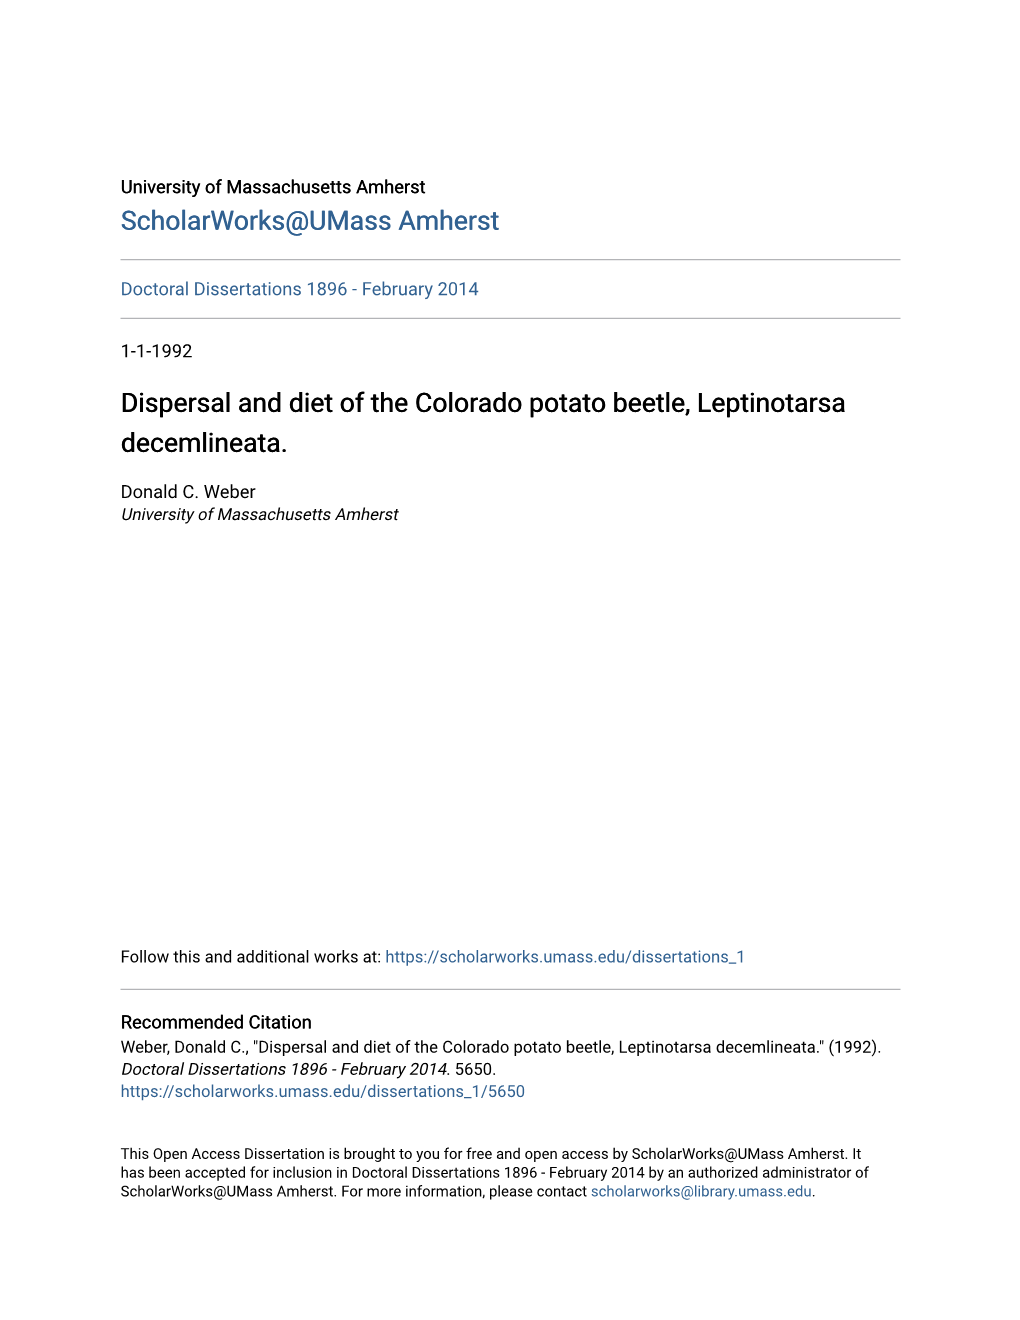 Dispersal and Diet of the Colorado Potato Beetle, Leptinotarsa Decemlineata